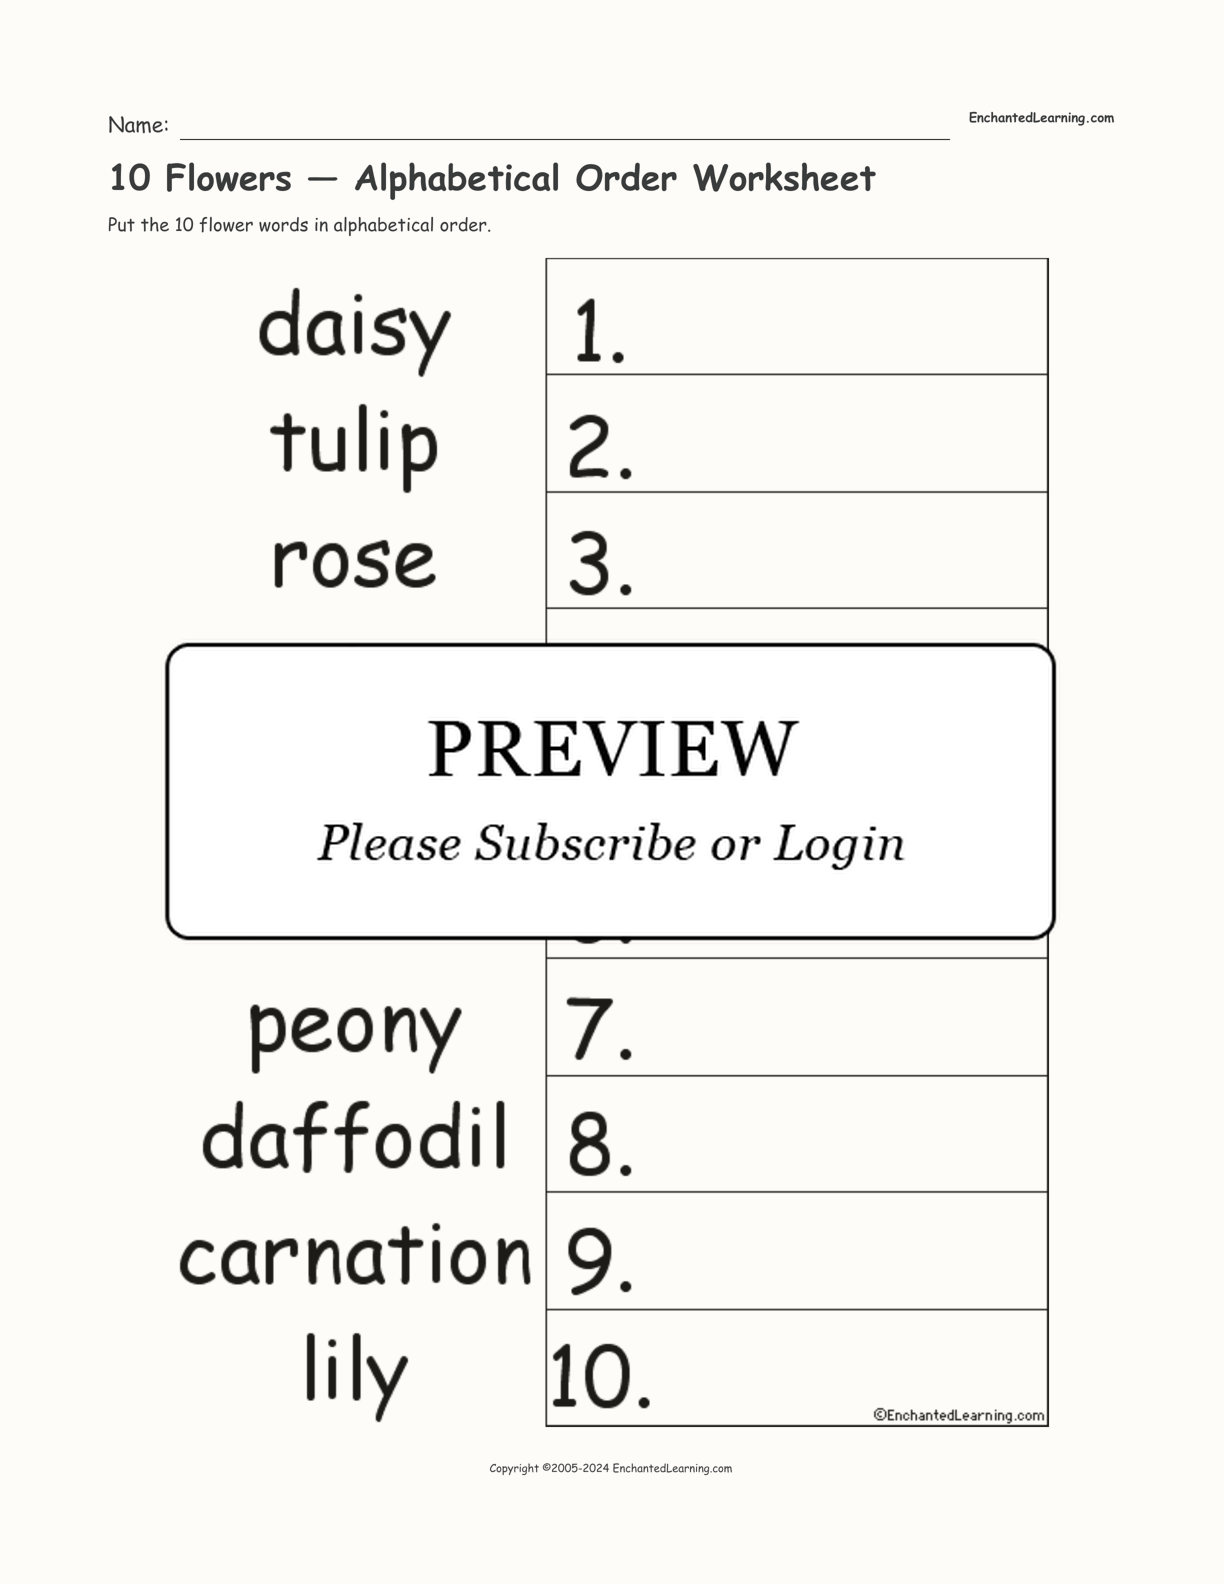 10 Flowers — Alphabetical Order Worksheet interactive worksheet page 1